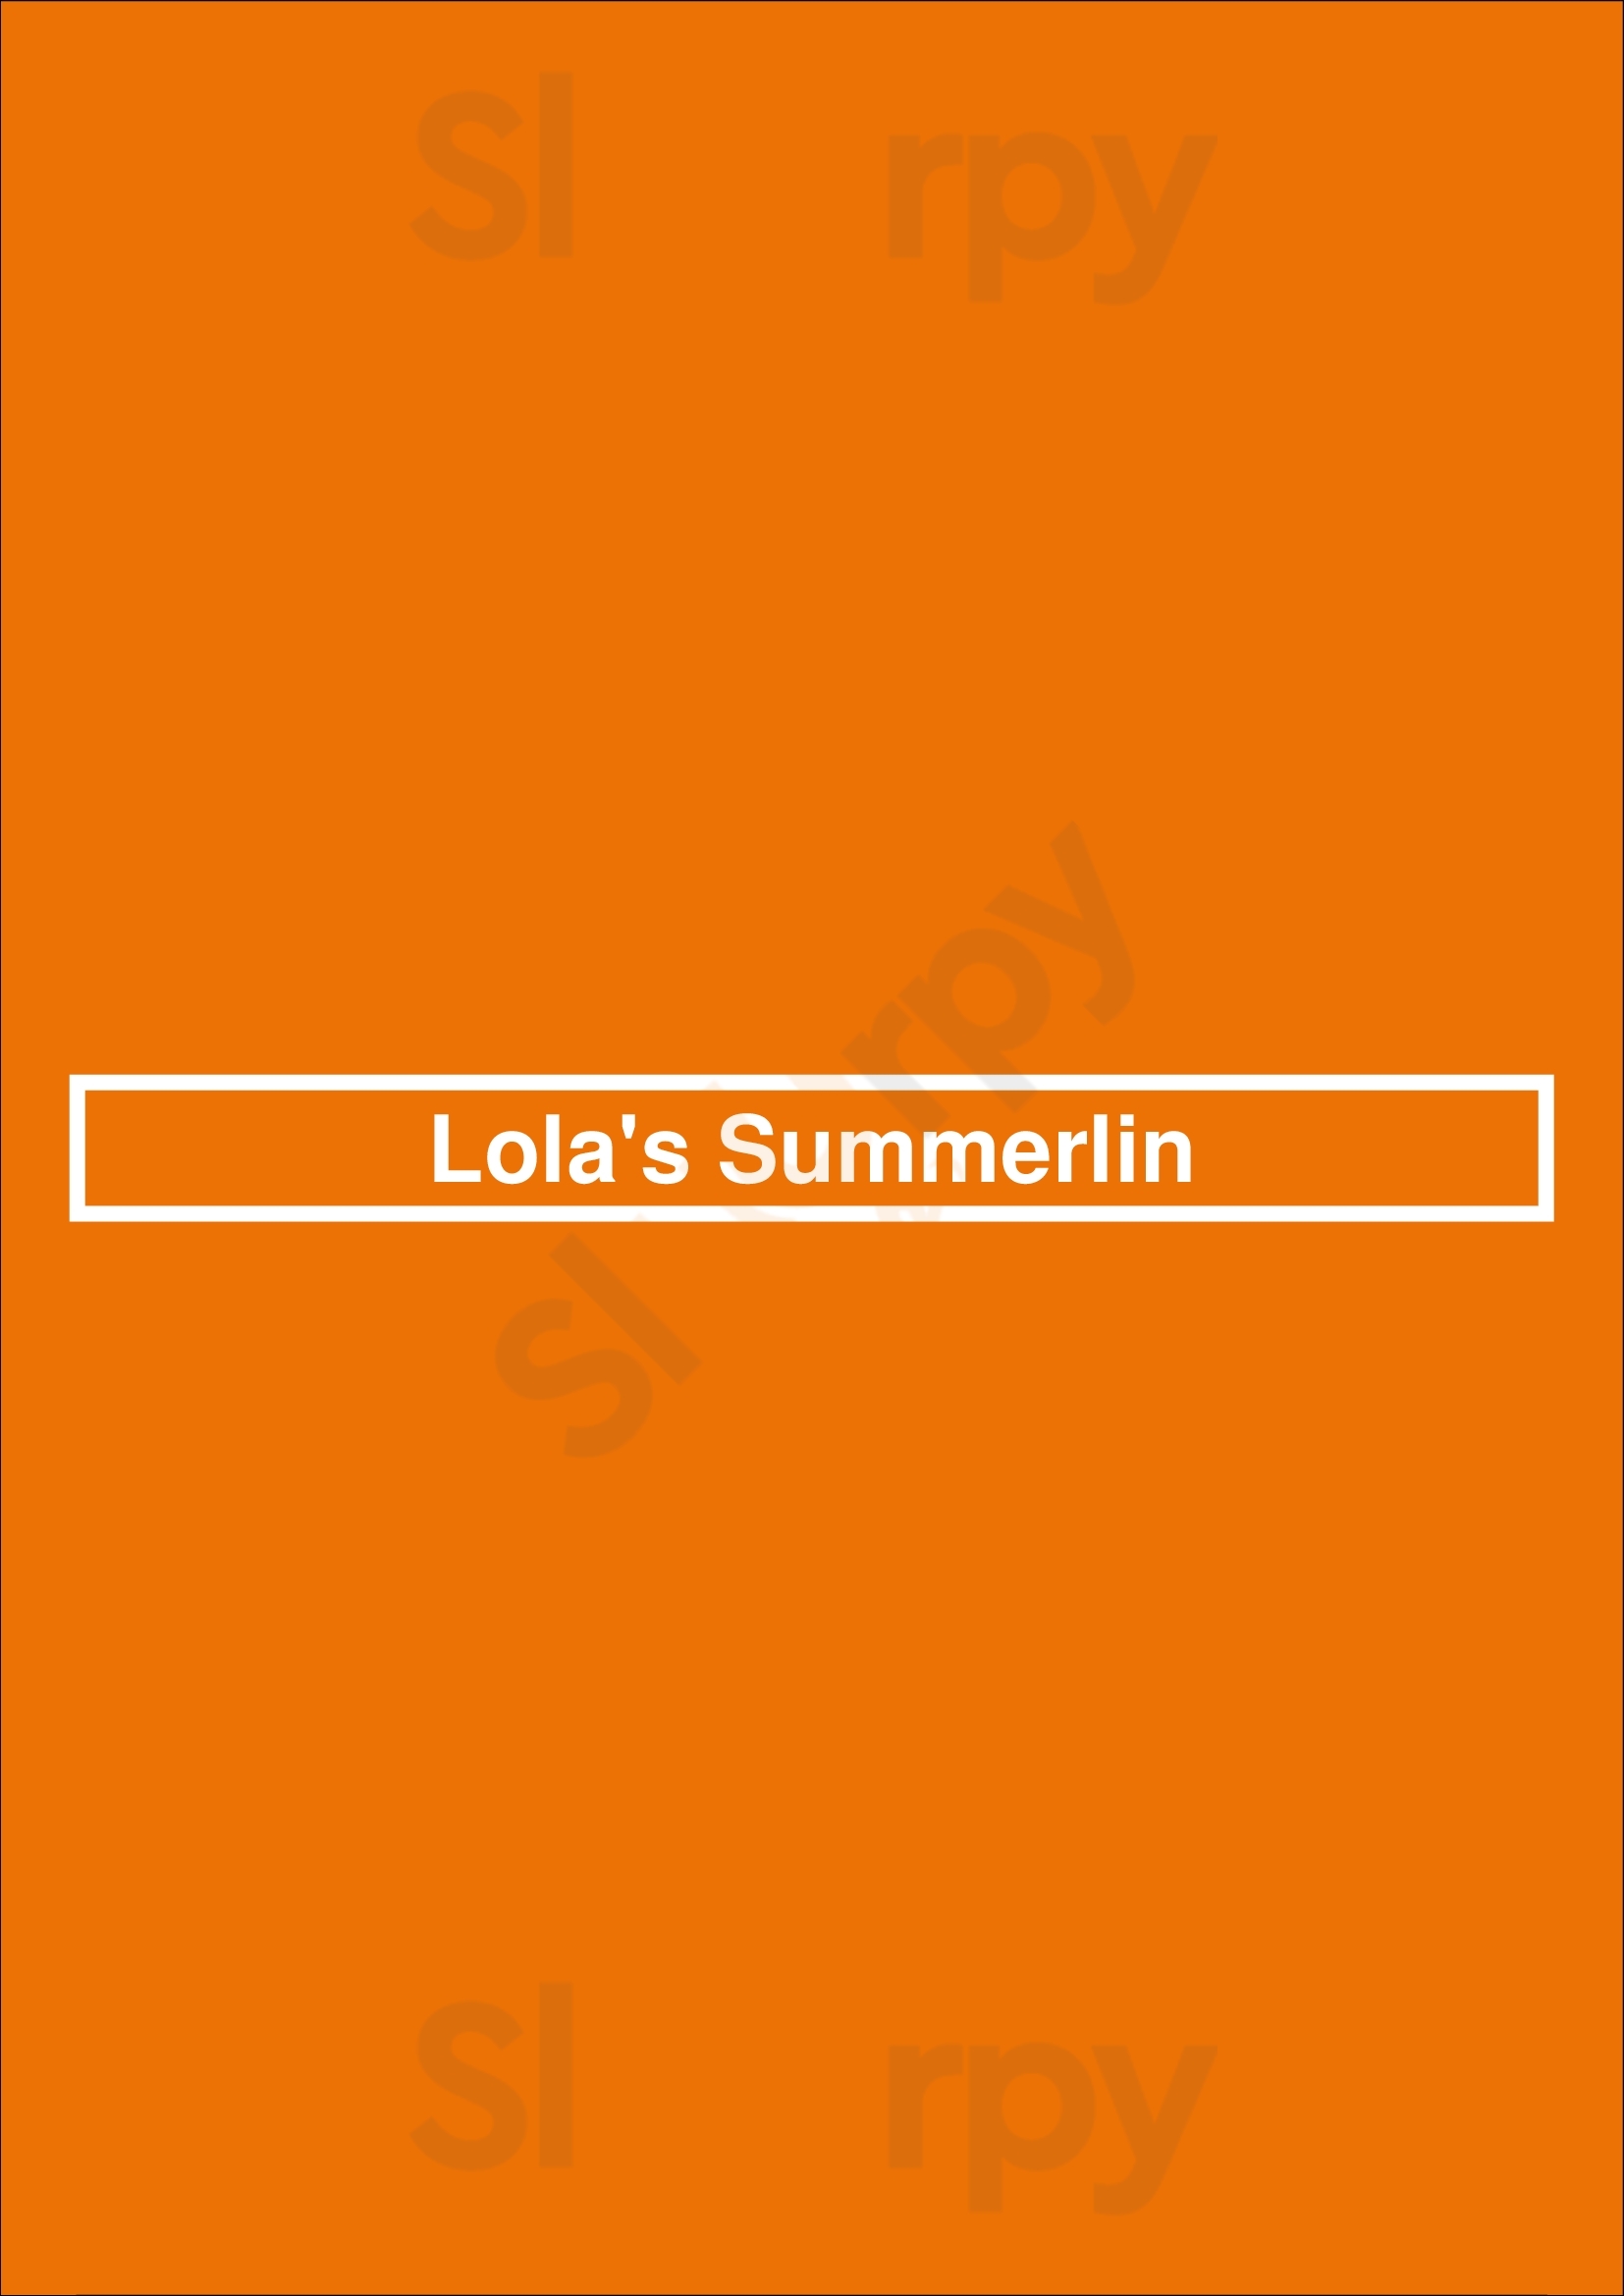 Lola's Summerlin Las Vegas Menu - 1